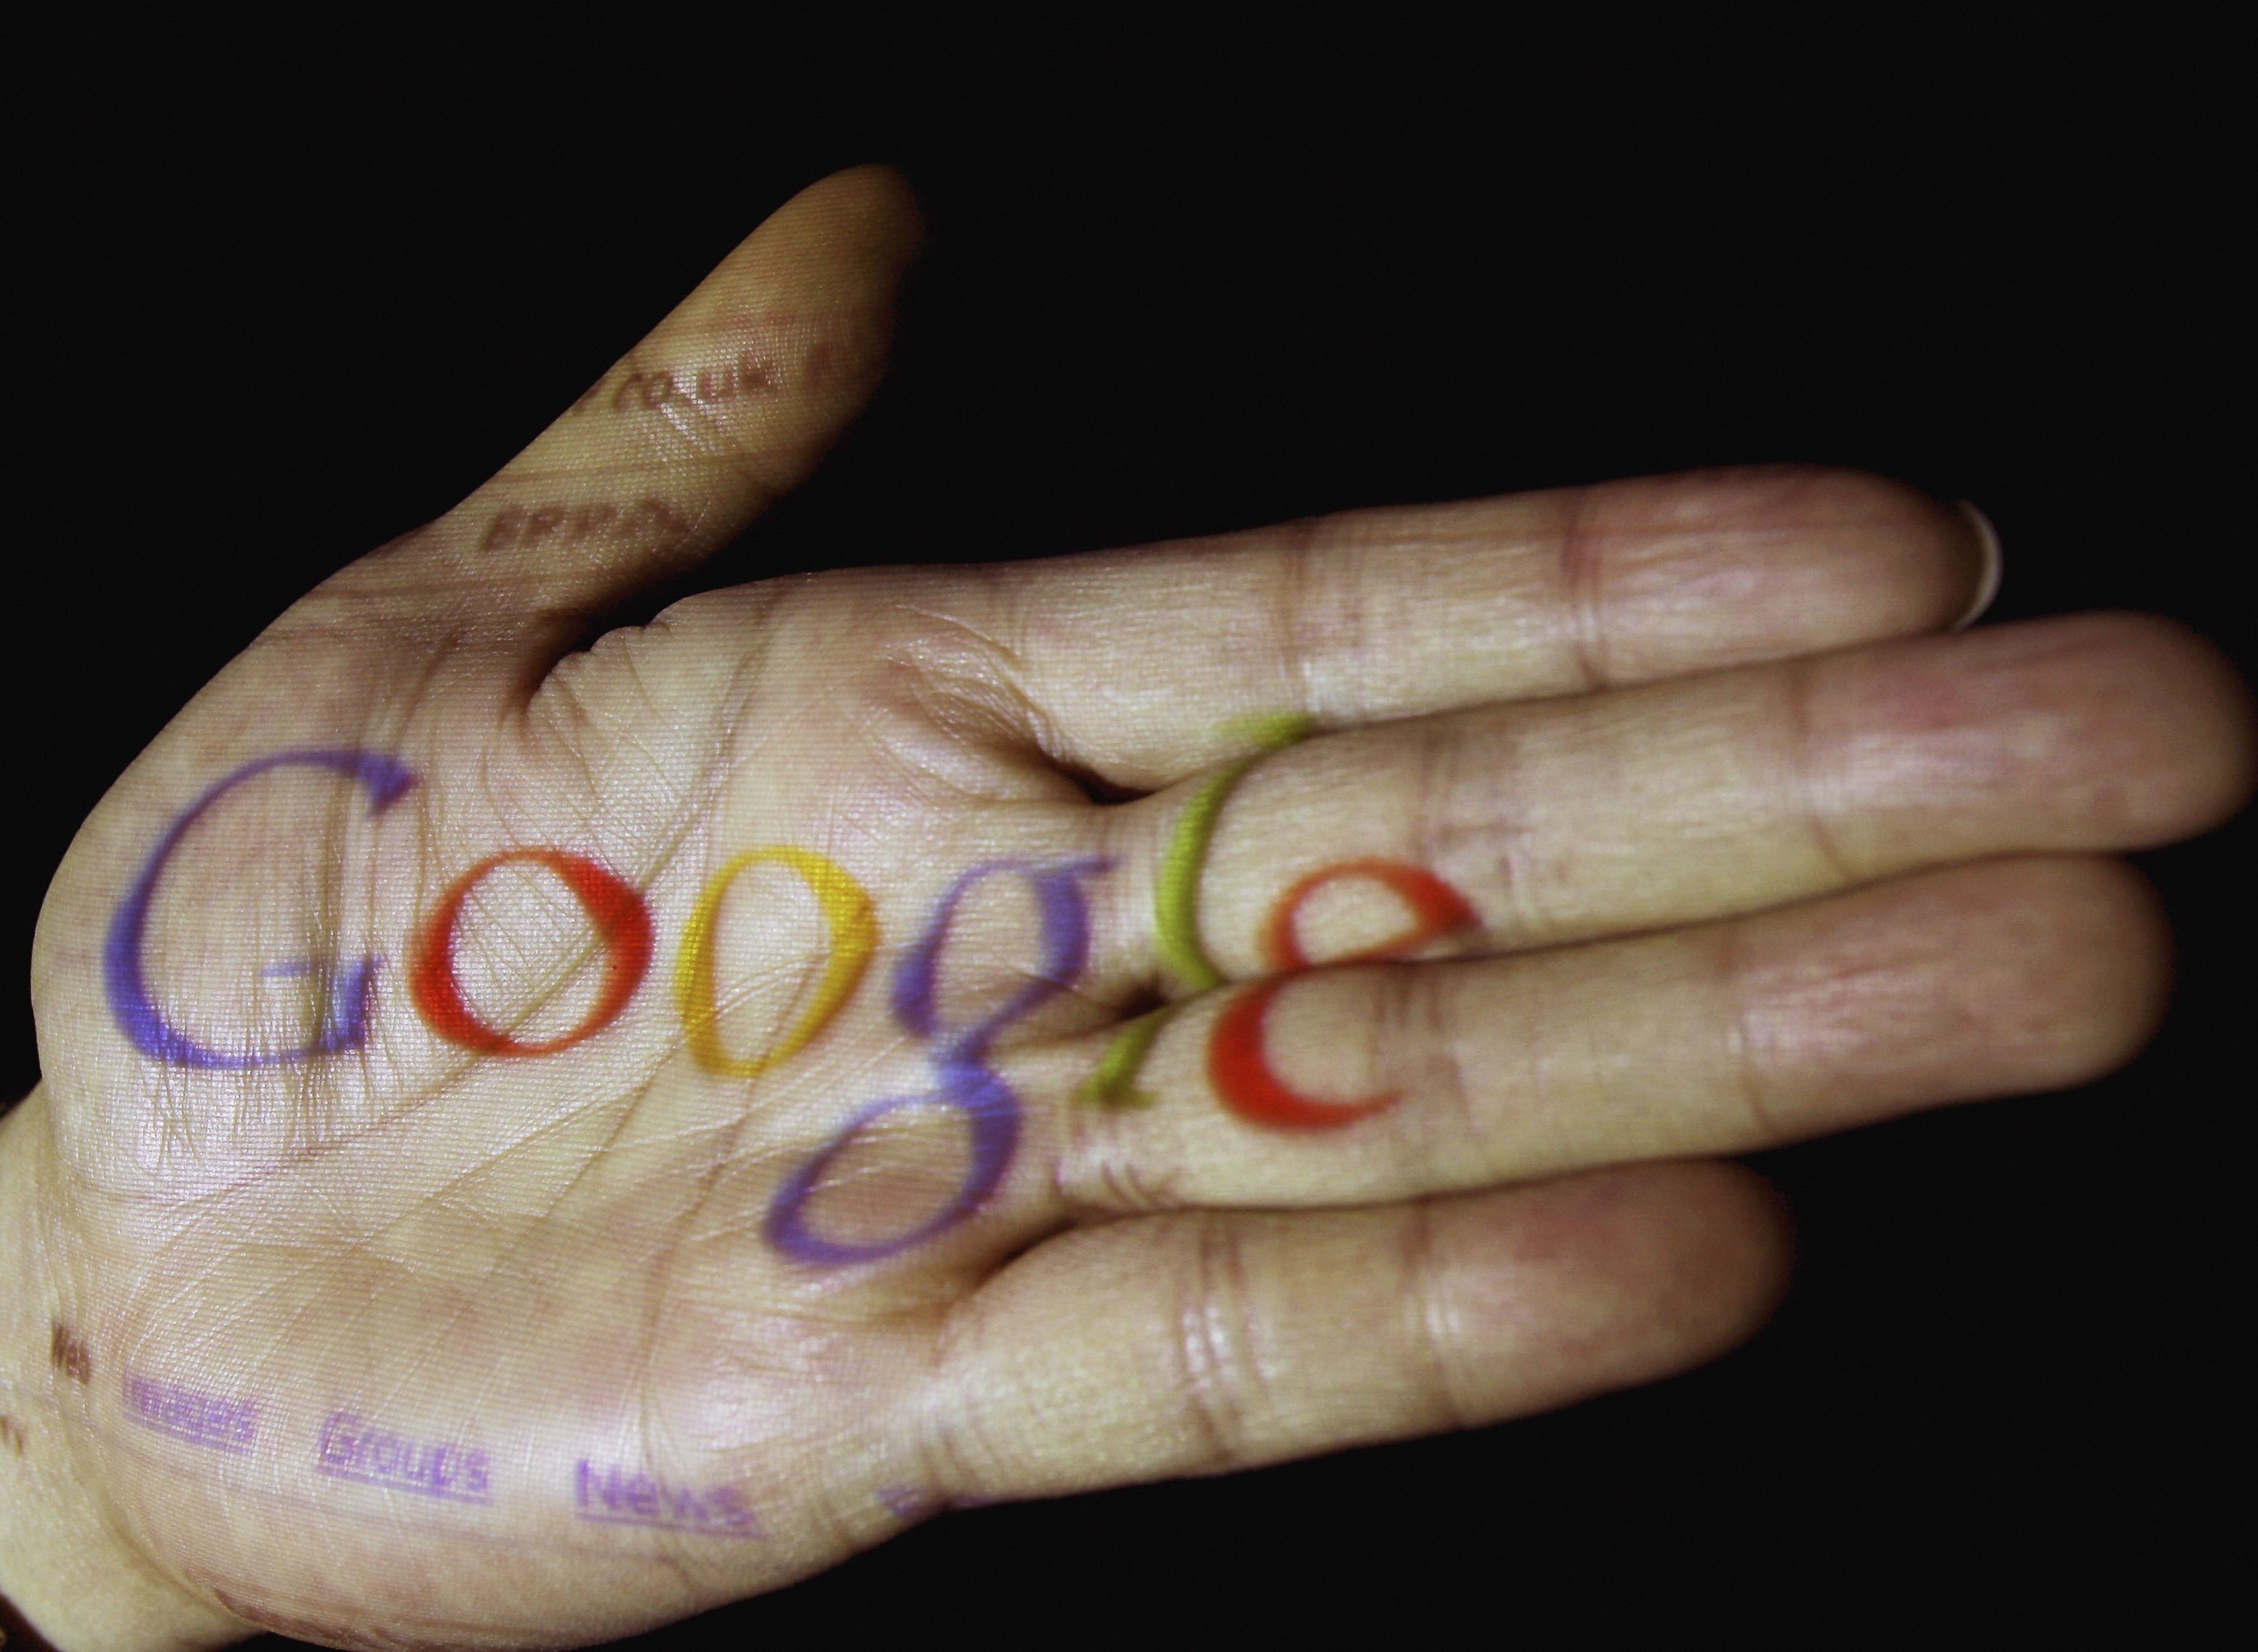 The Google logo on a hand